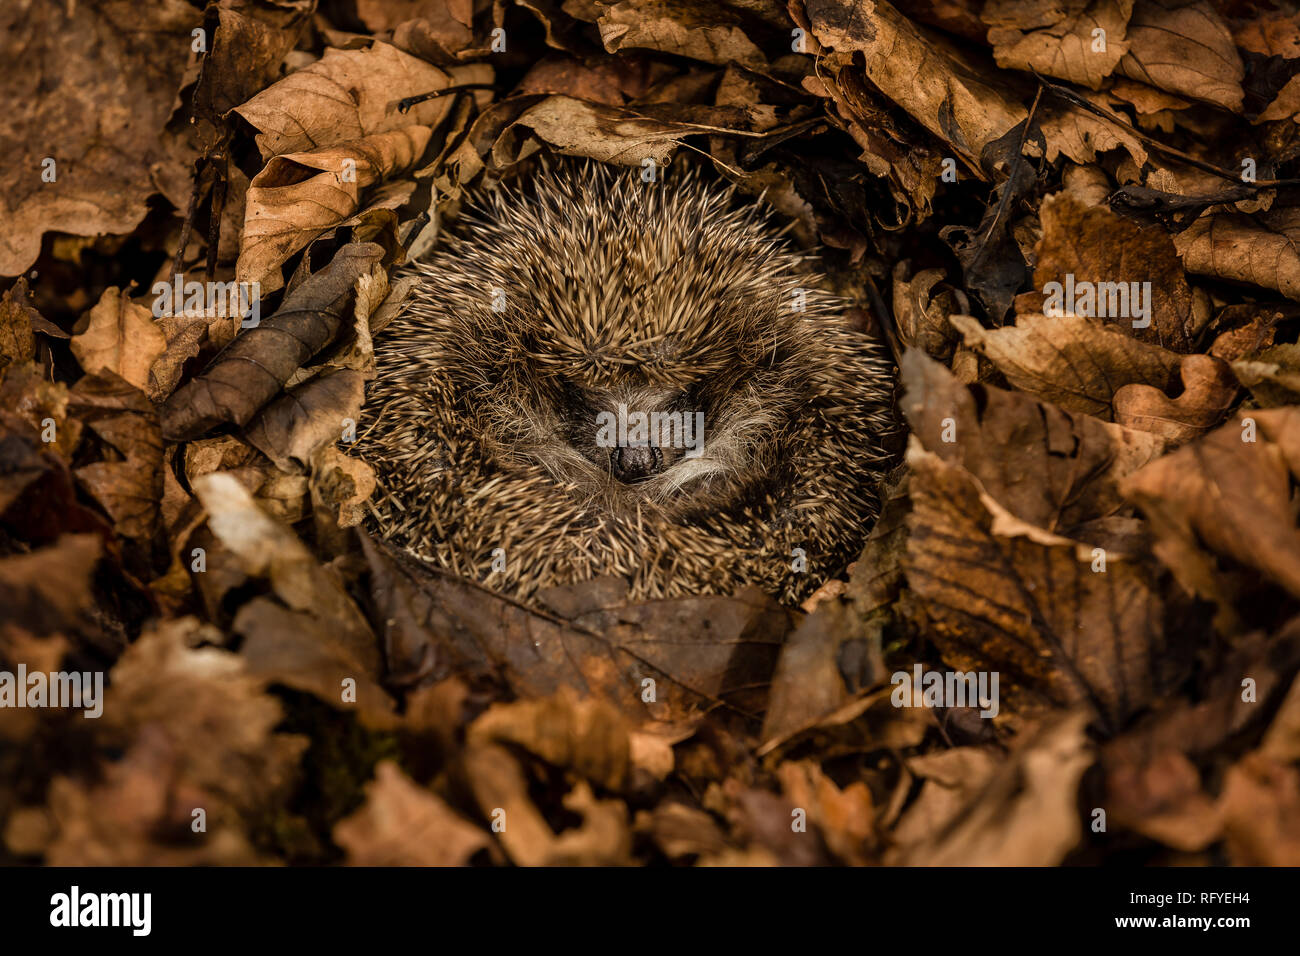 Hedgehog, wild, native, European hedgehog in natural woodland habitat and hibernating in golden brown Autumn or fall leaves.  Landscape, Horizontal Stock Photo